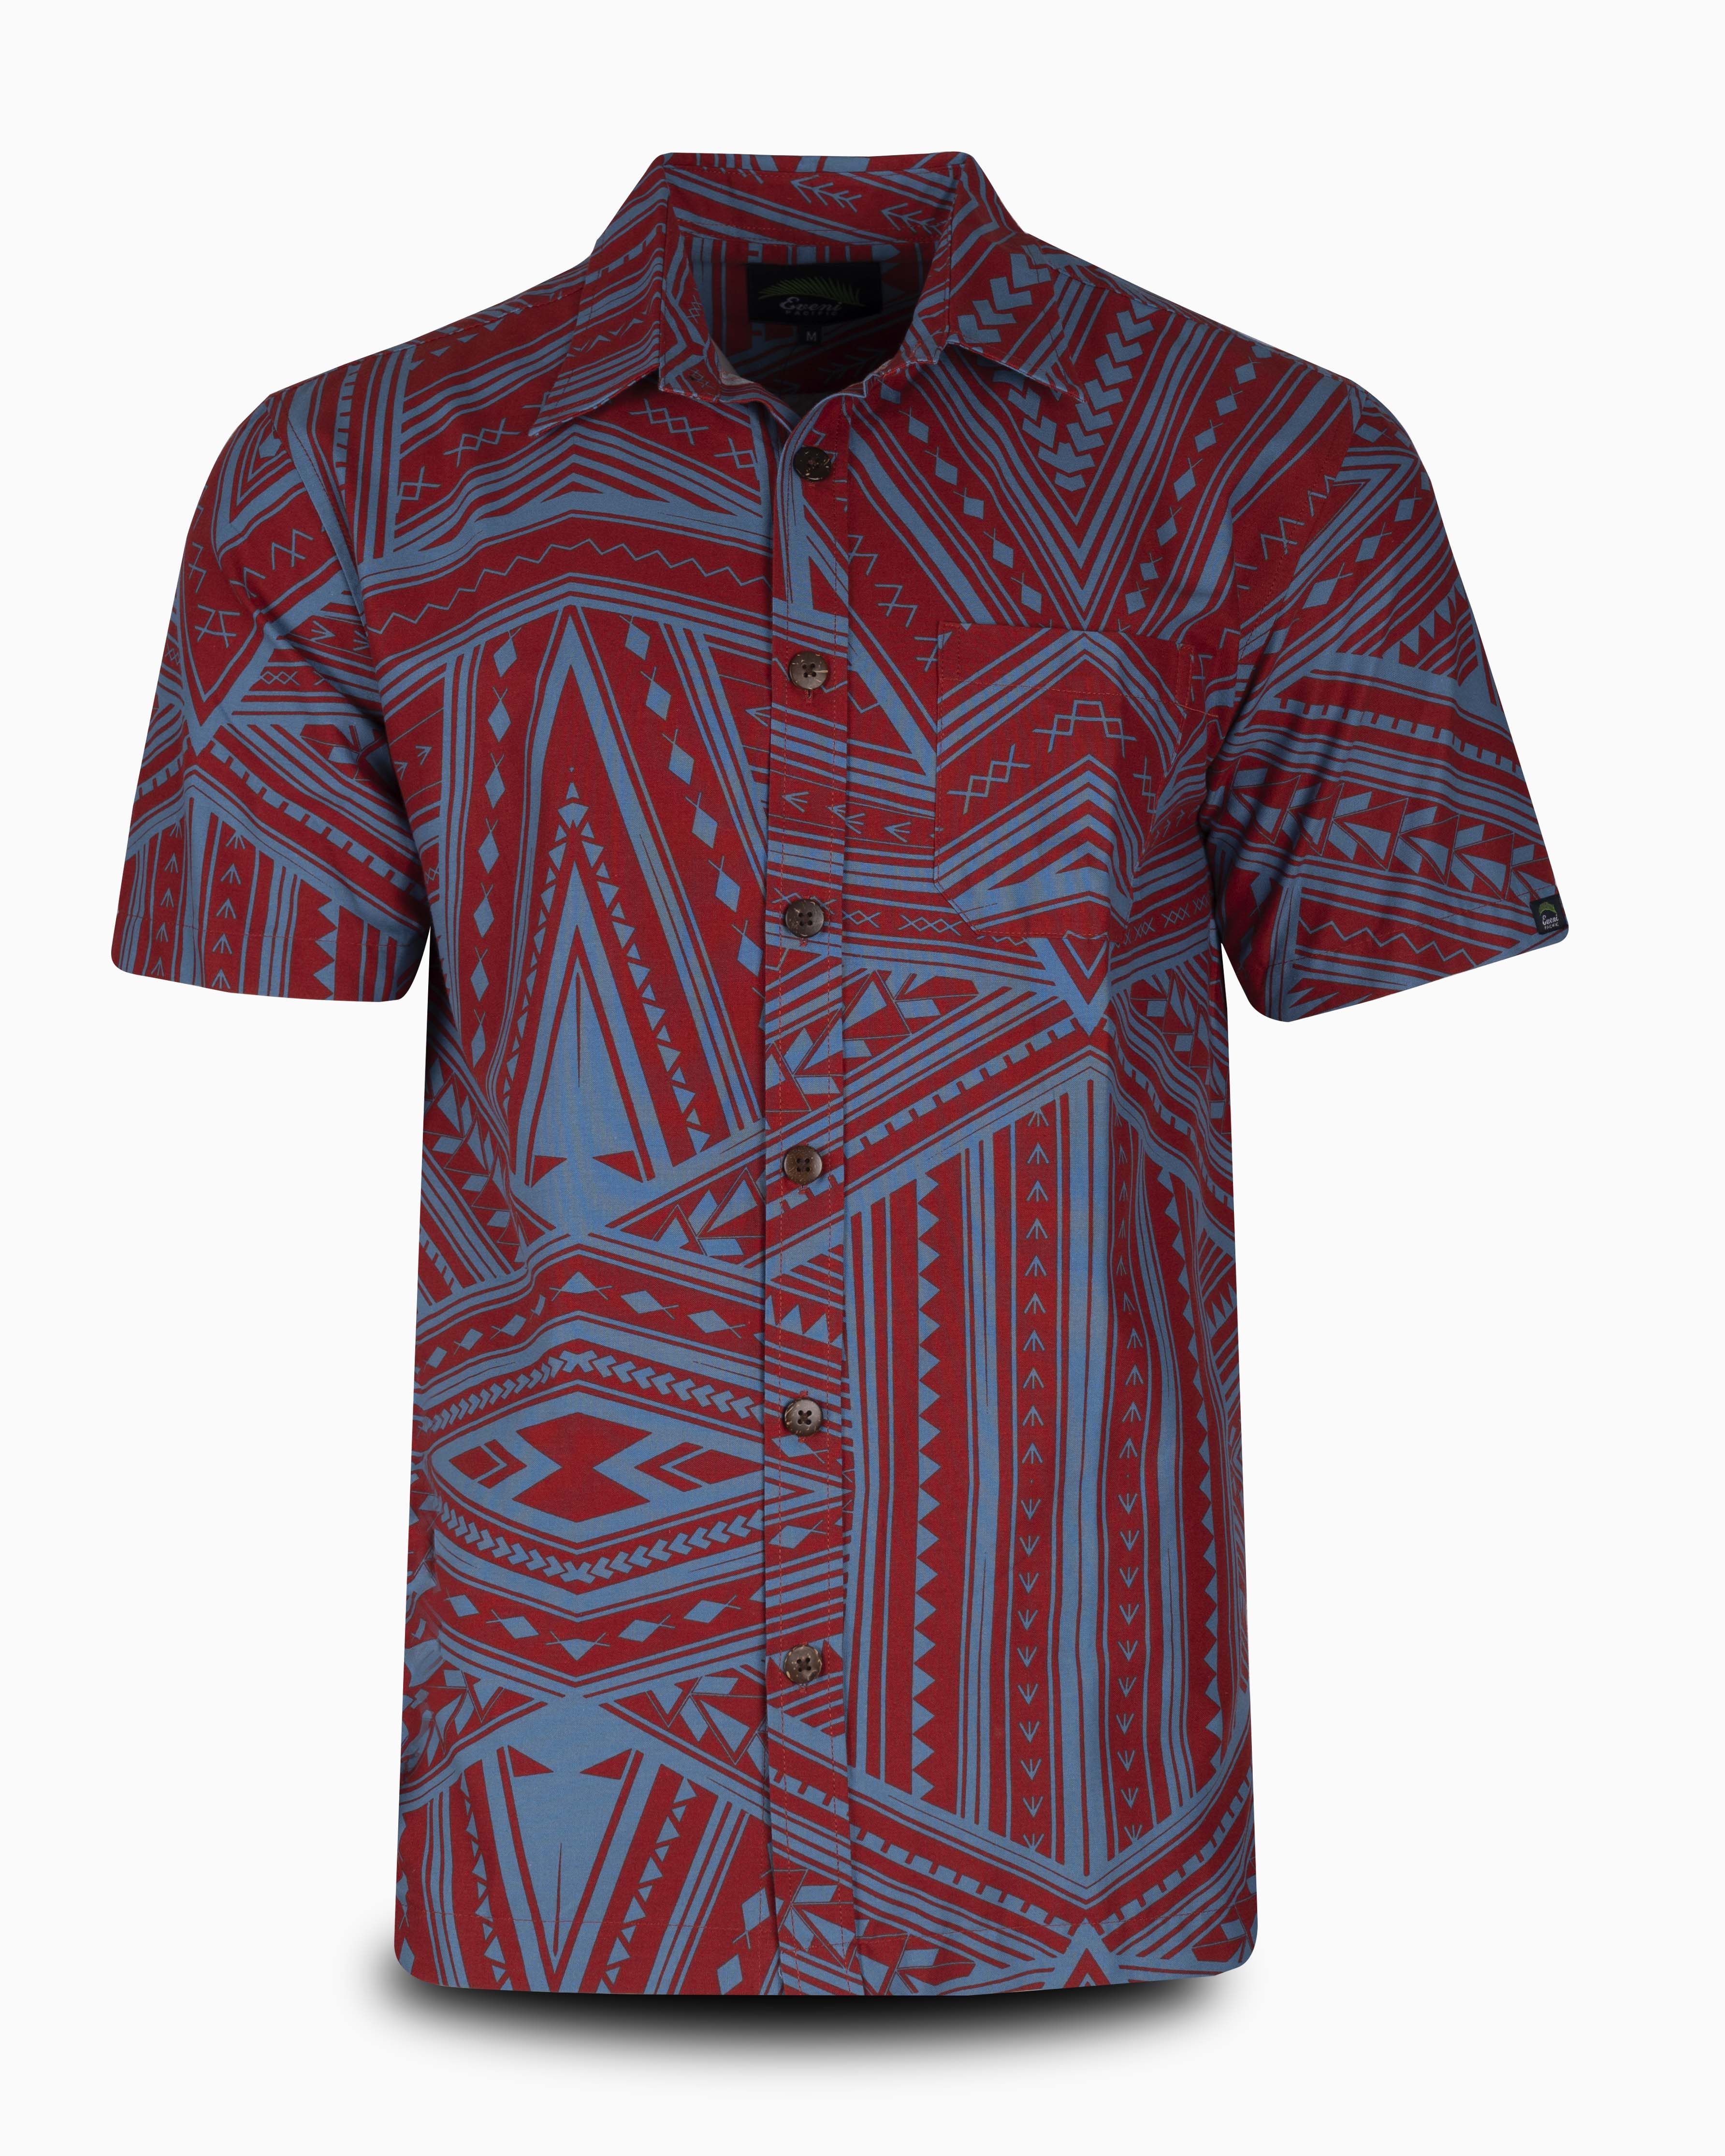 Eveni Pacific Men's Classic Shirt - CURRANT RED